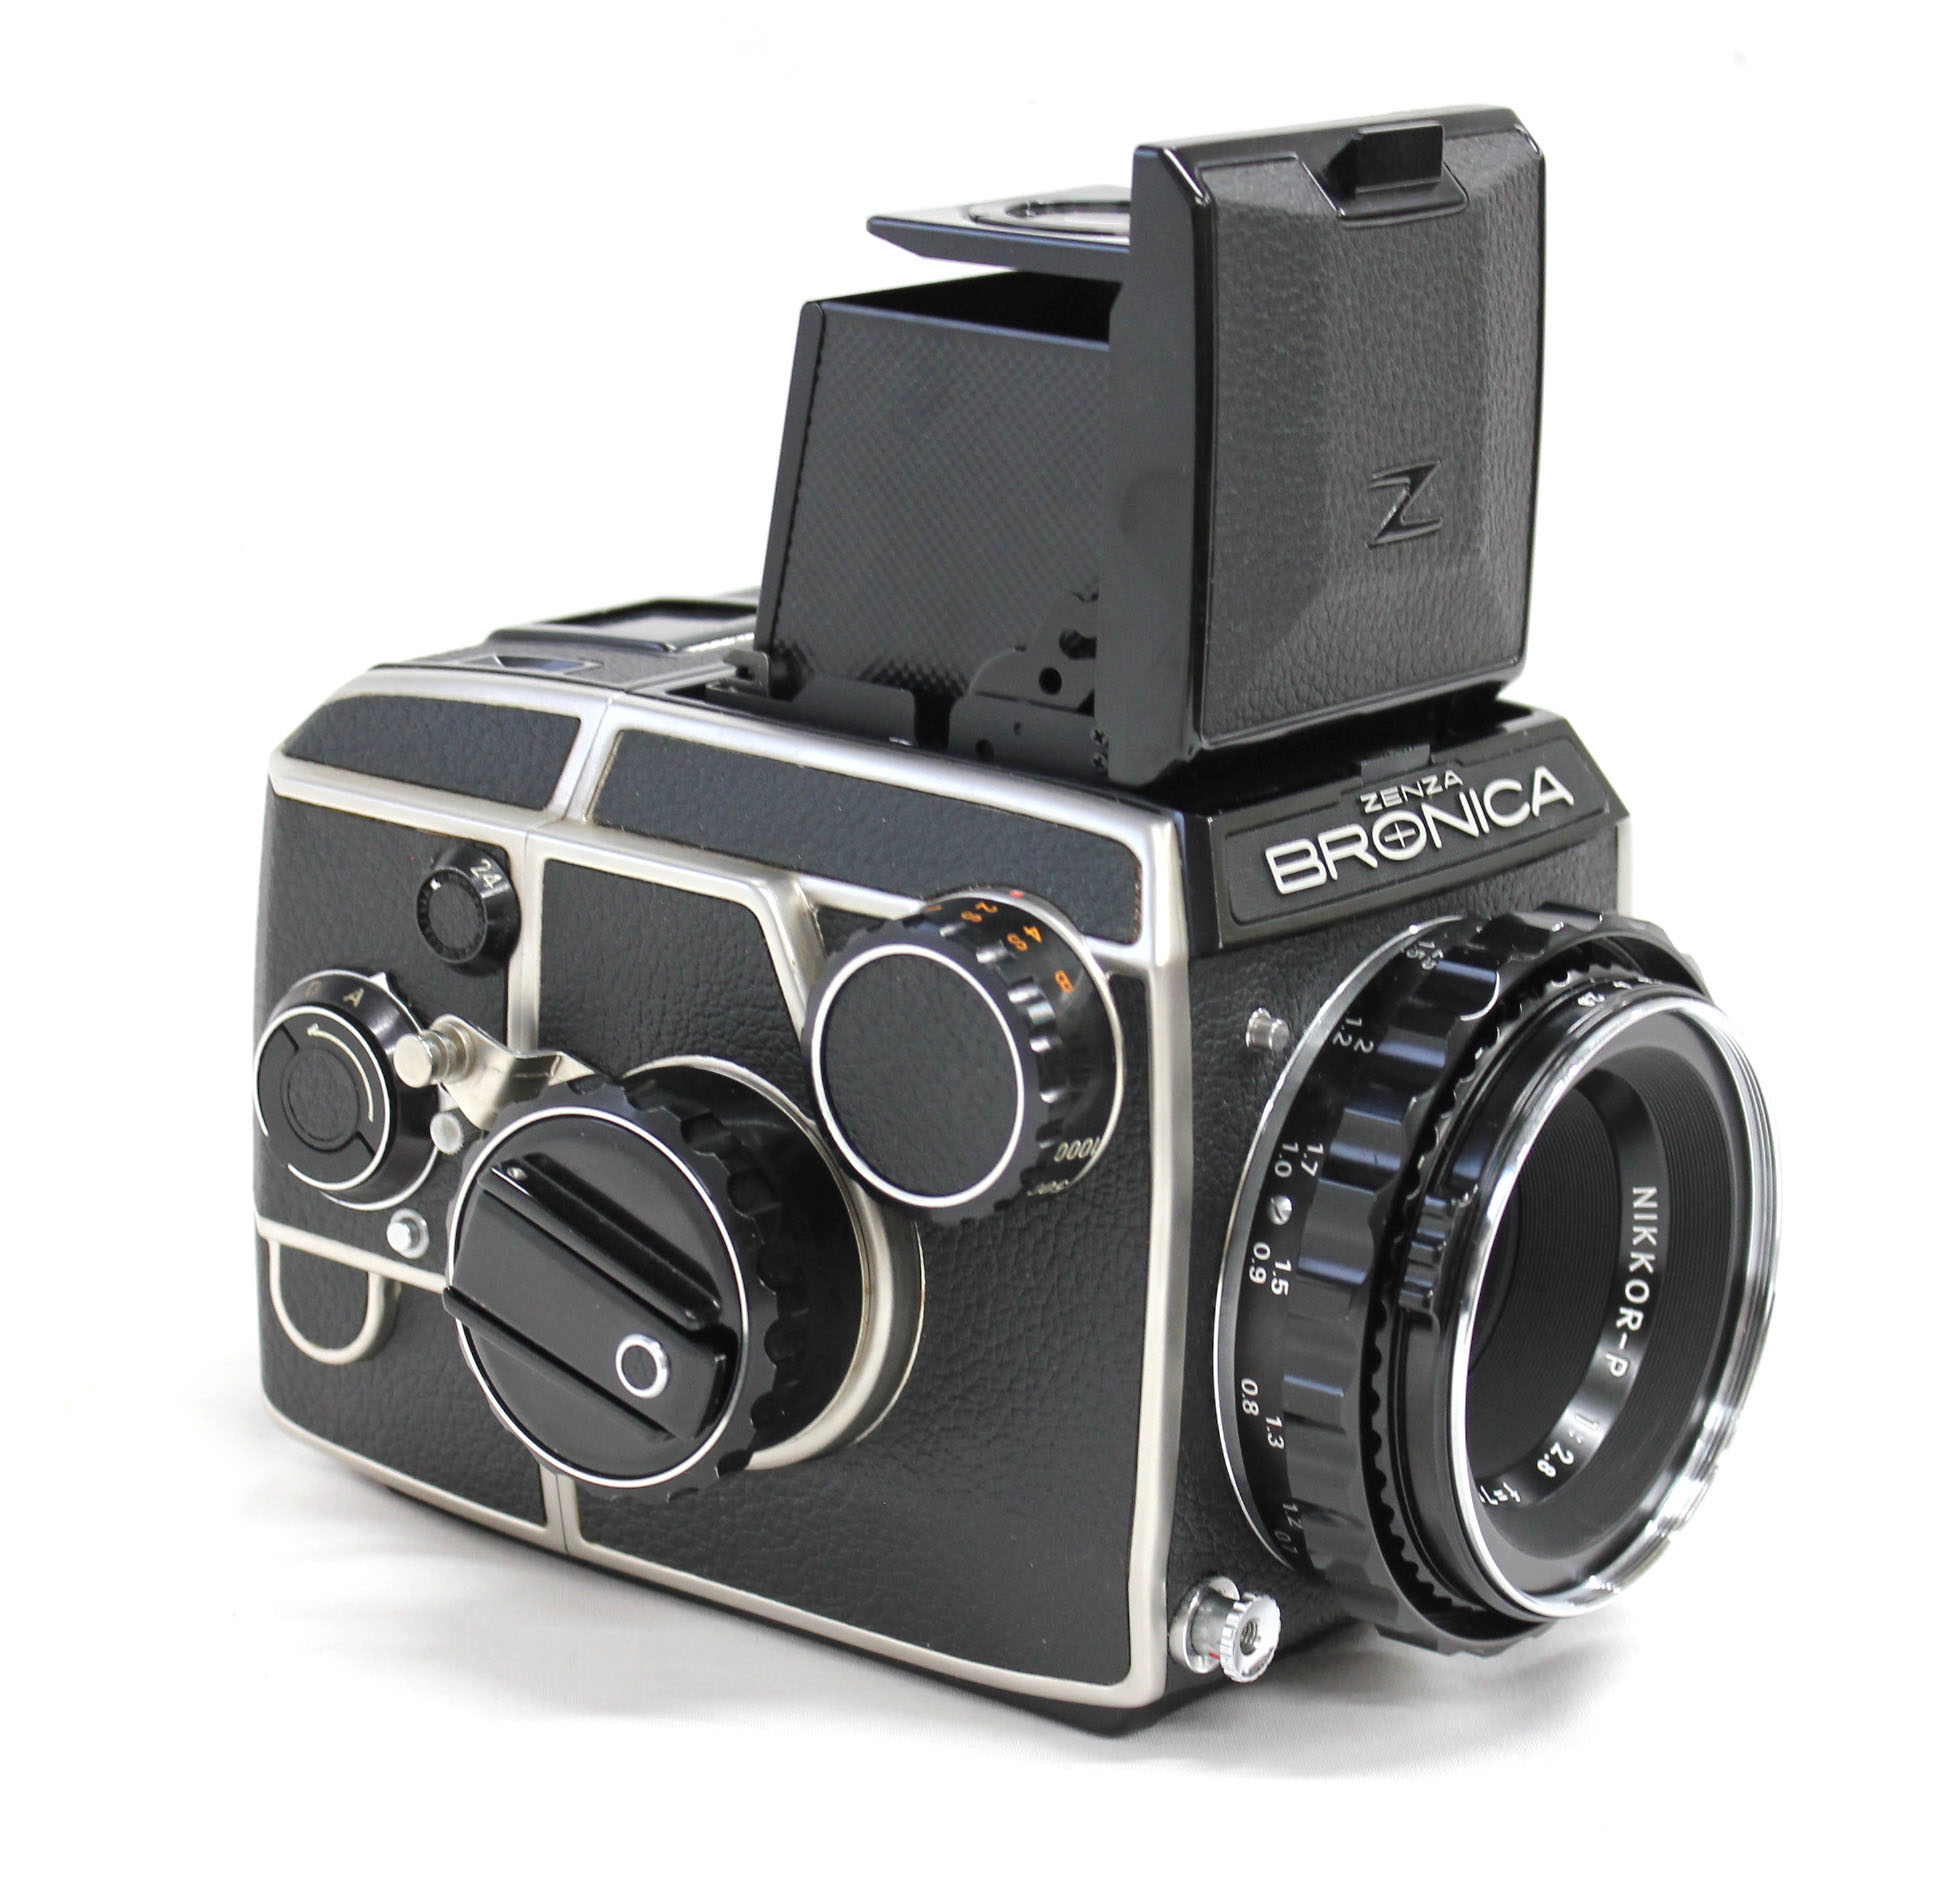  Zenza Bronica EC 6x6 Medium Format Camera w/ Nikkor-P 75mm F/2.8 Lens from Japan Photo 1